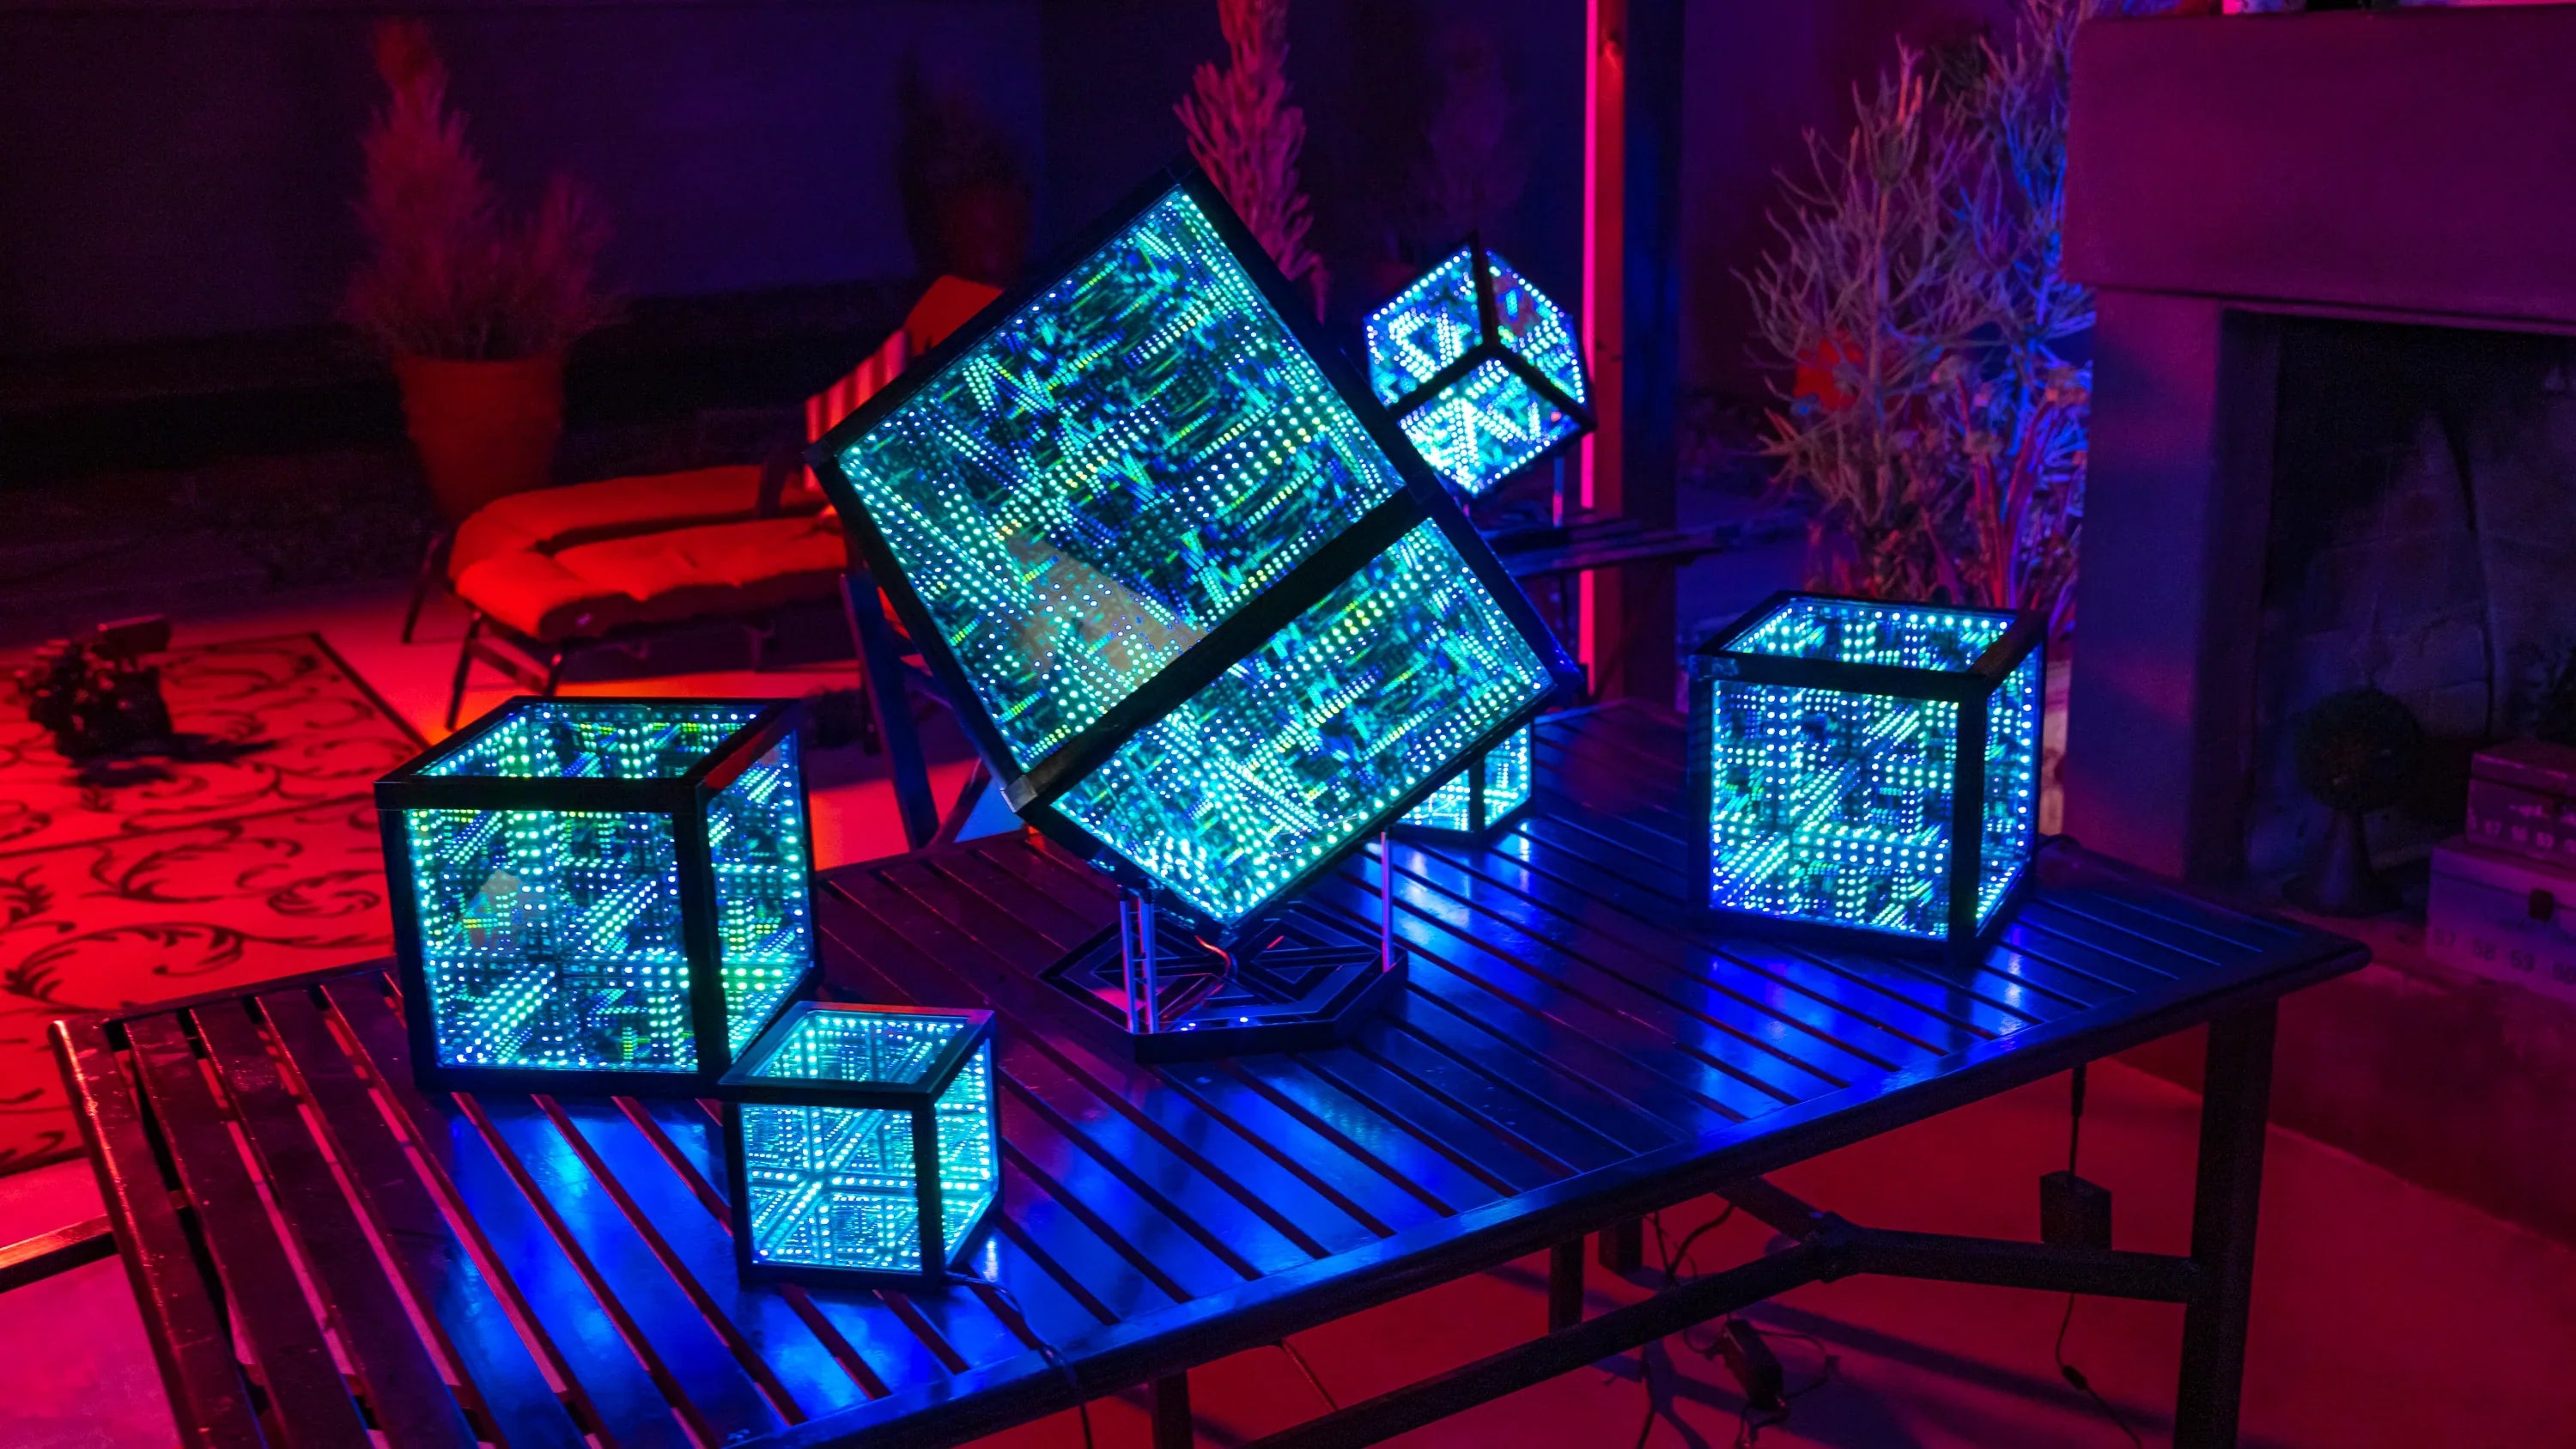 futuristic light fixtures on table